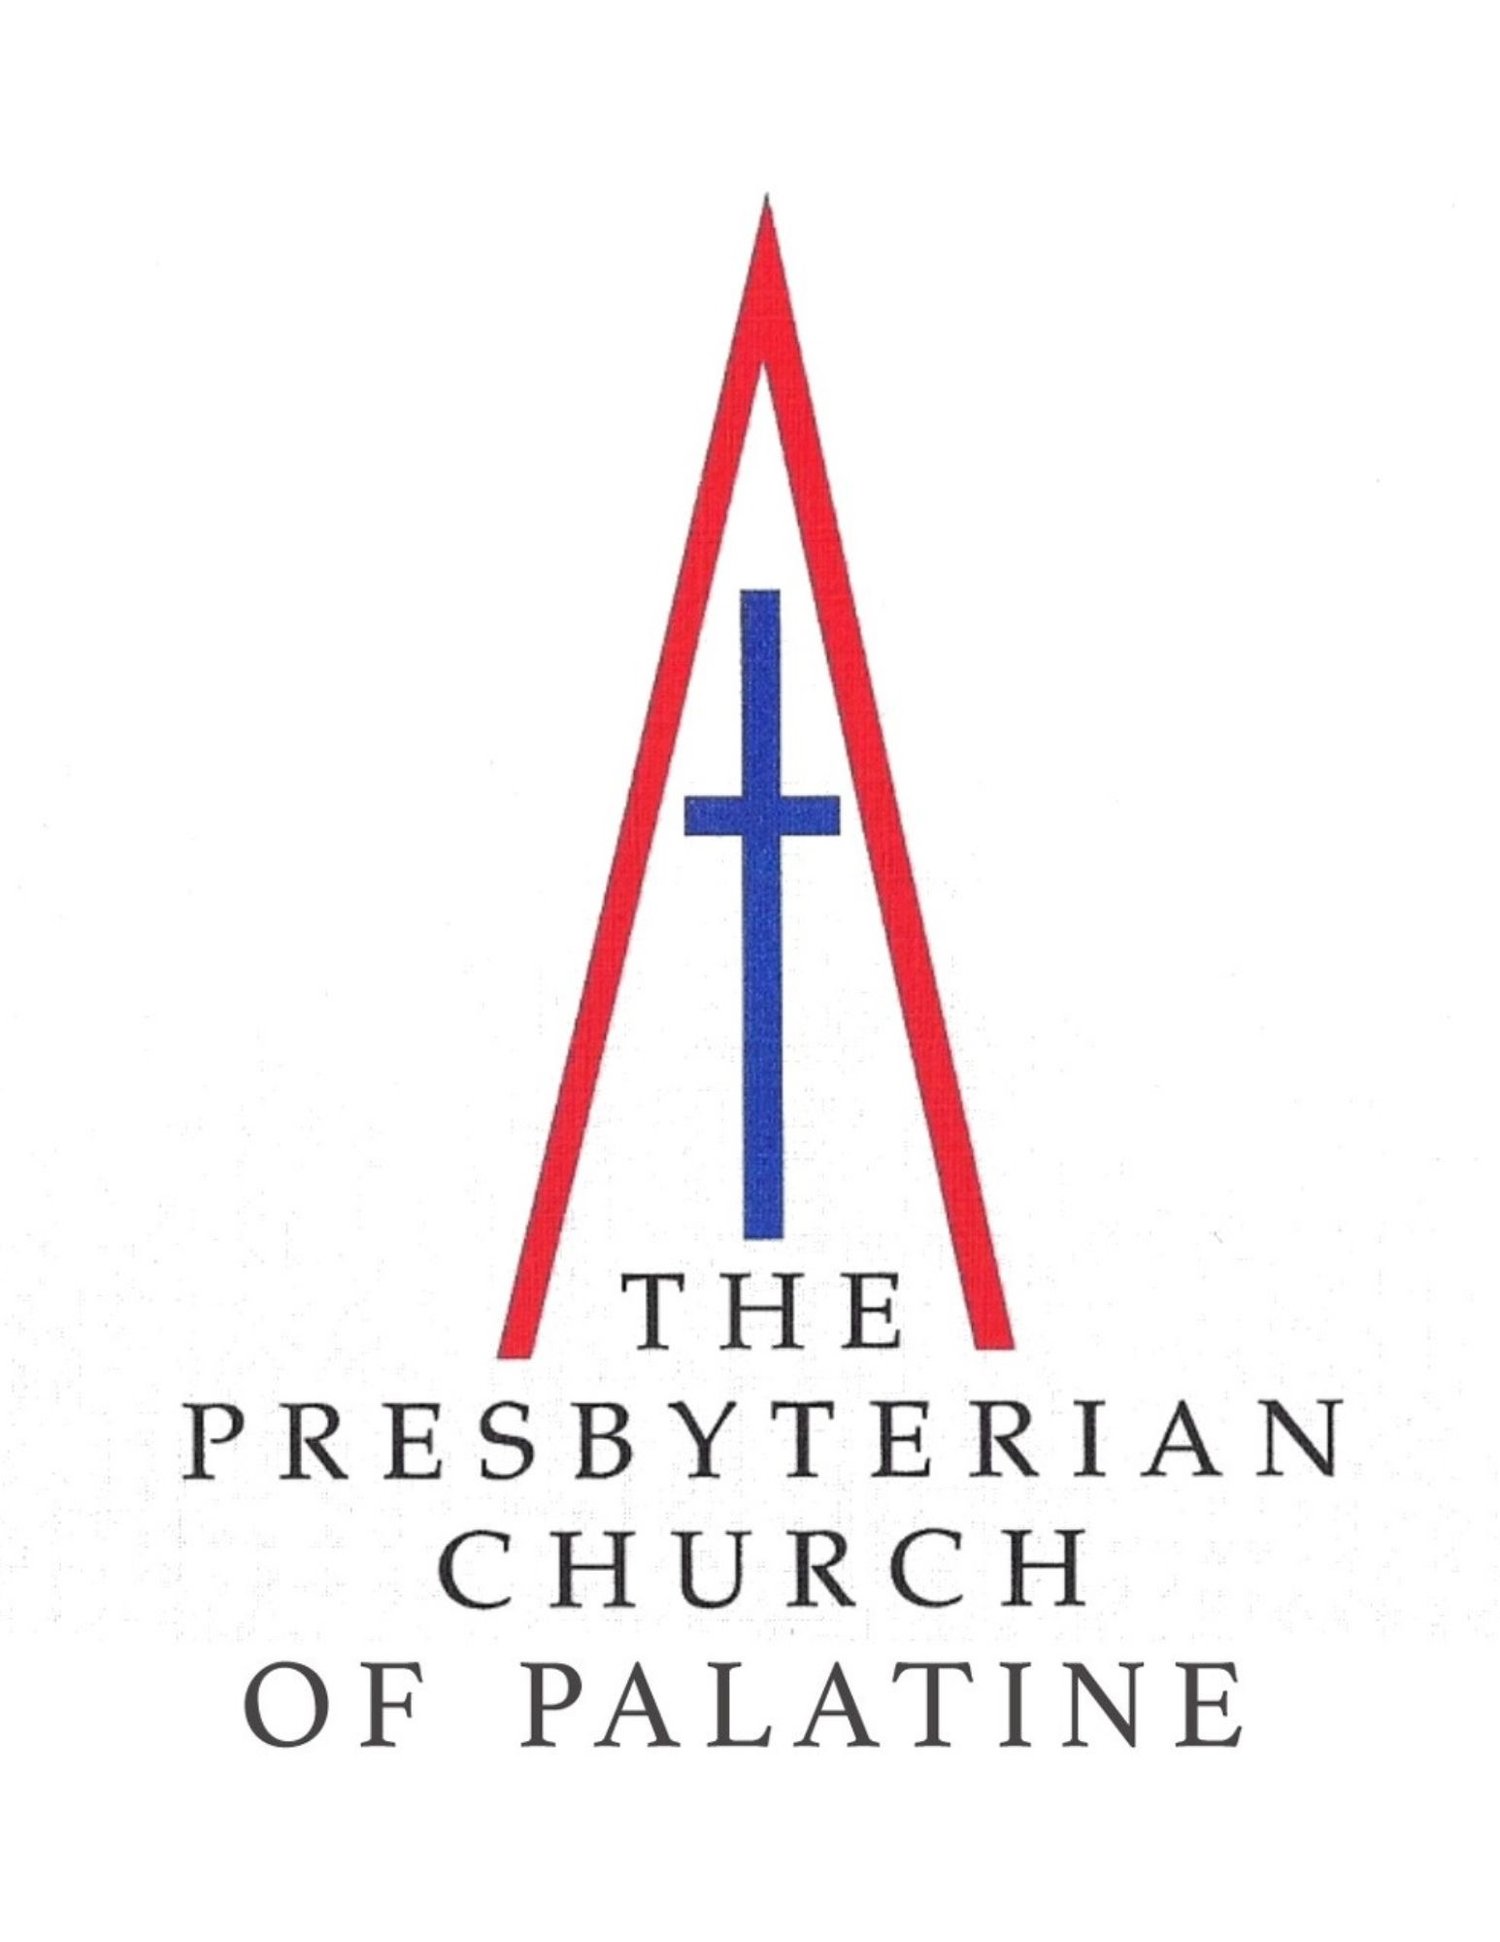 The Presbyterian Church of Palatine